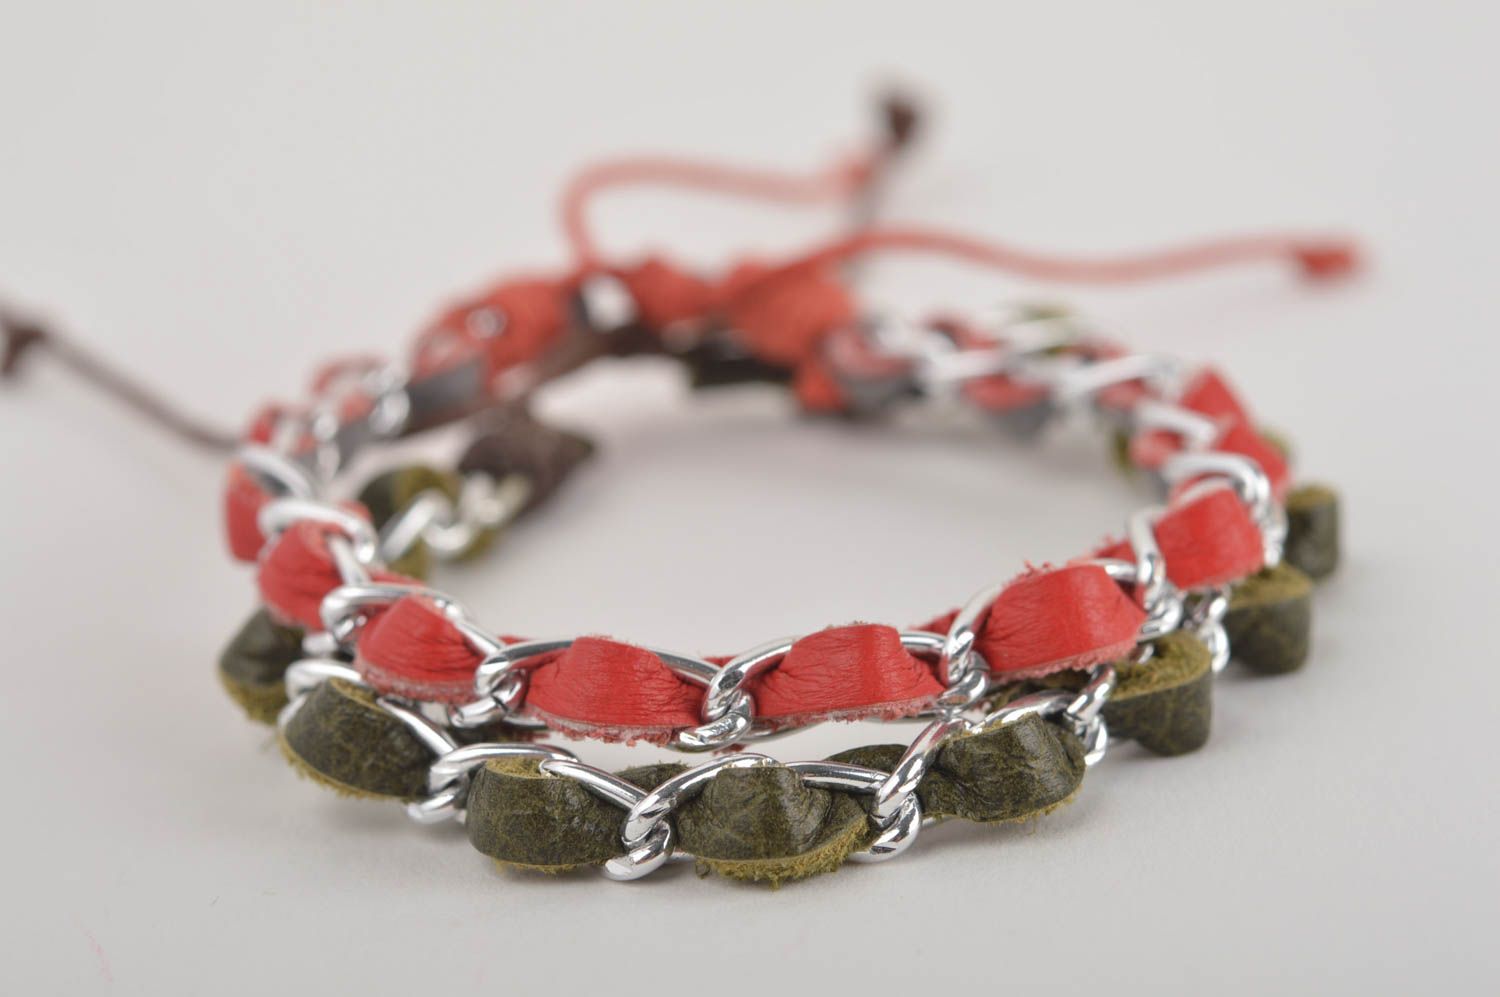 Handcrafted jewelry 2 chain bracelet leather bracelets for women souvenir ideas photo 2